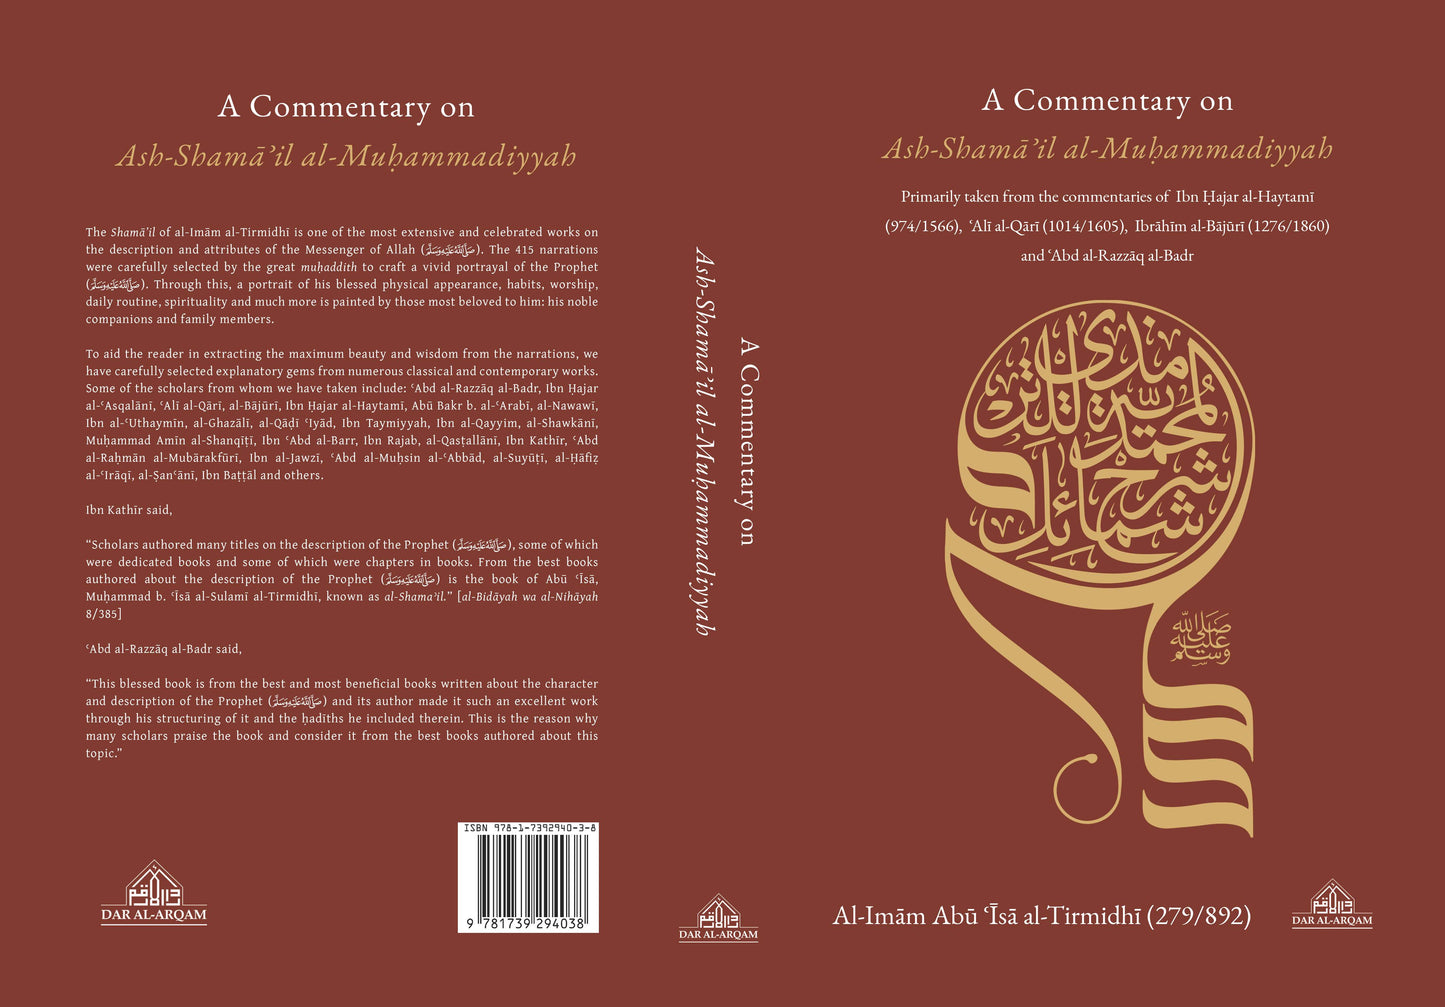 A Commentary on ash-Shama'il al-Muhammadiyyah